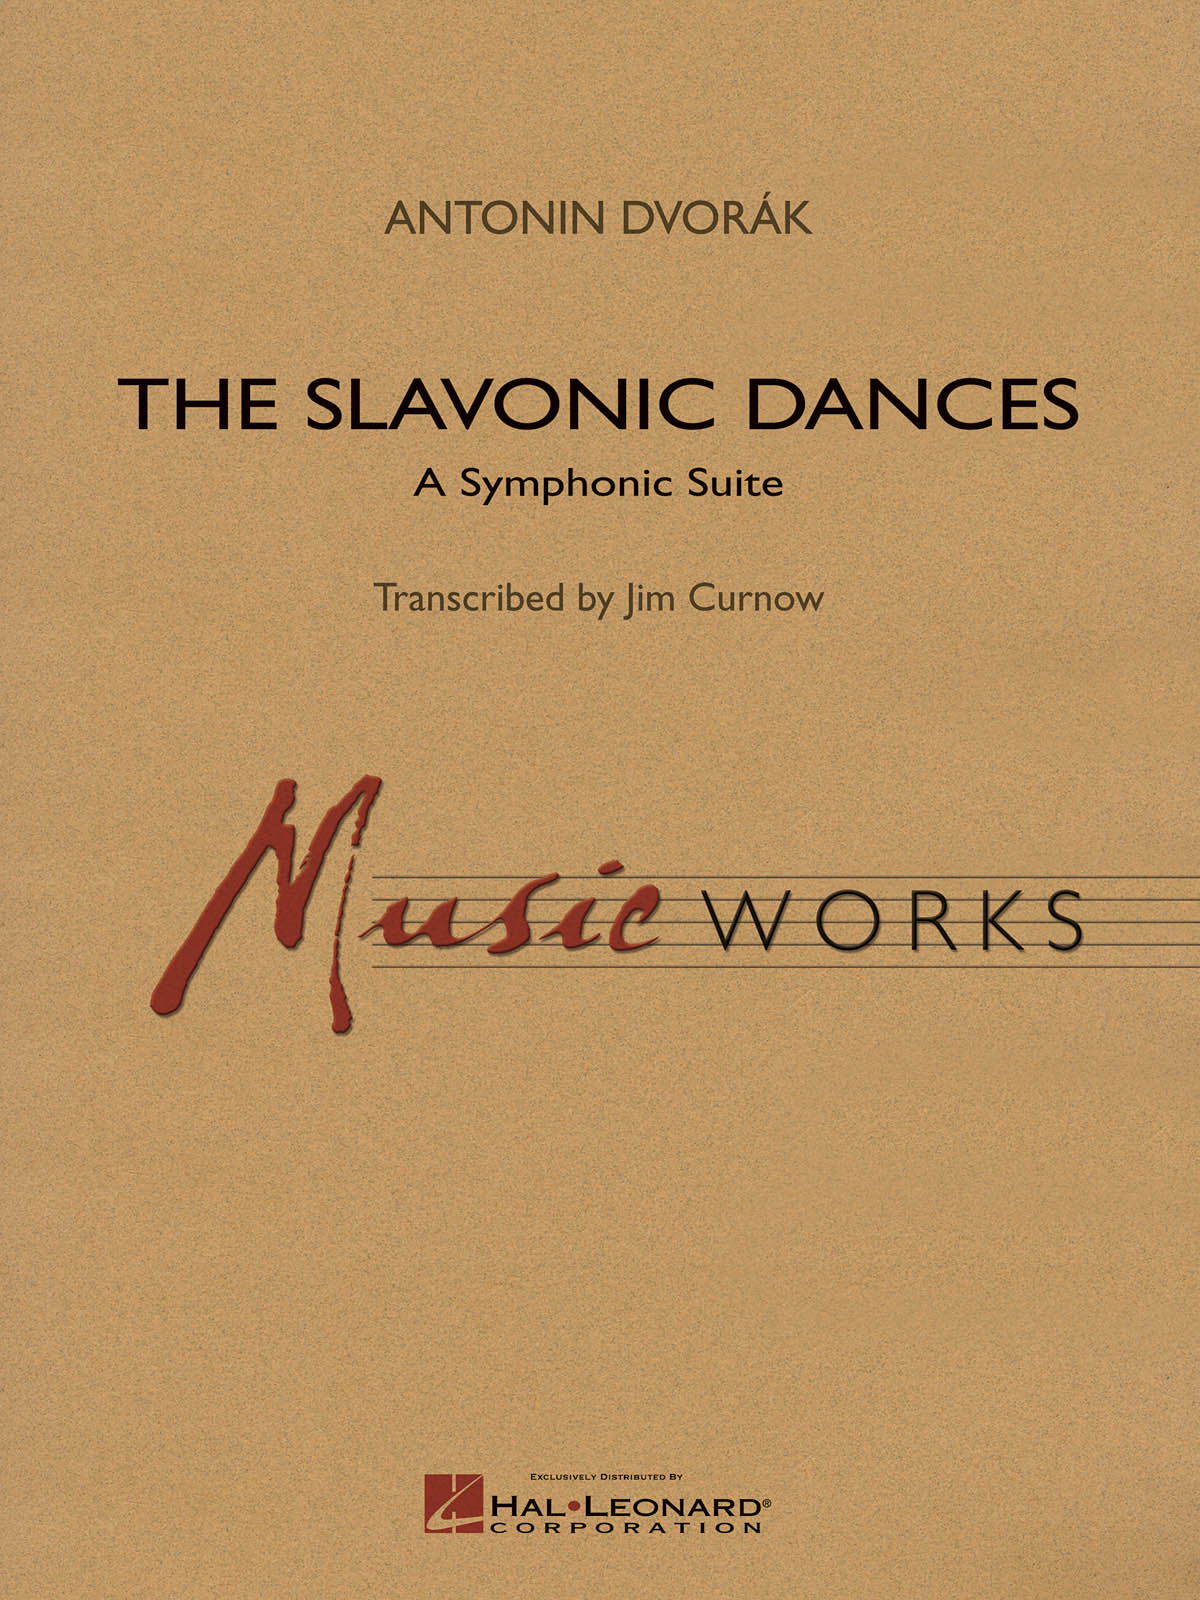 Dvorak Slavonic Dances Curnow Concert Band Sc/pts Sheet Music Songbook